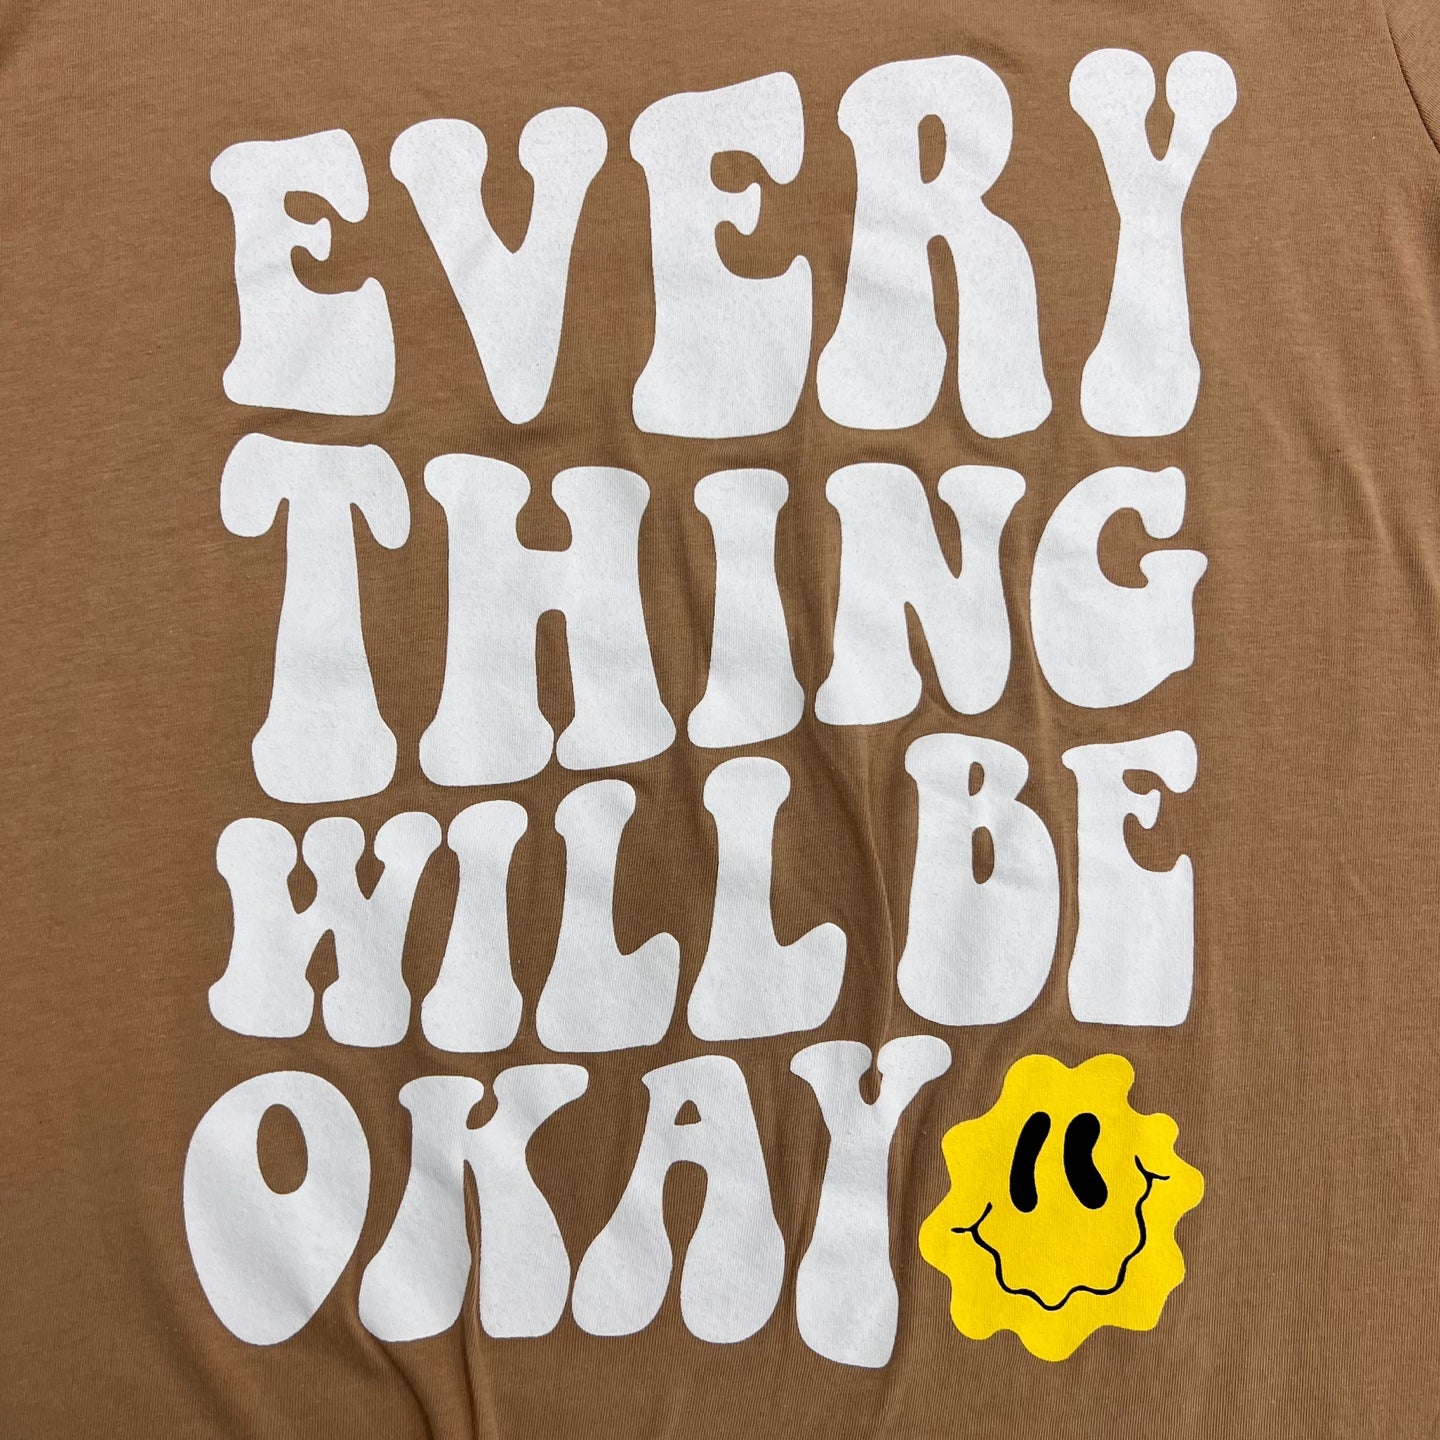 Women's Everything Will Be Ok Graphic T-Shirt